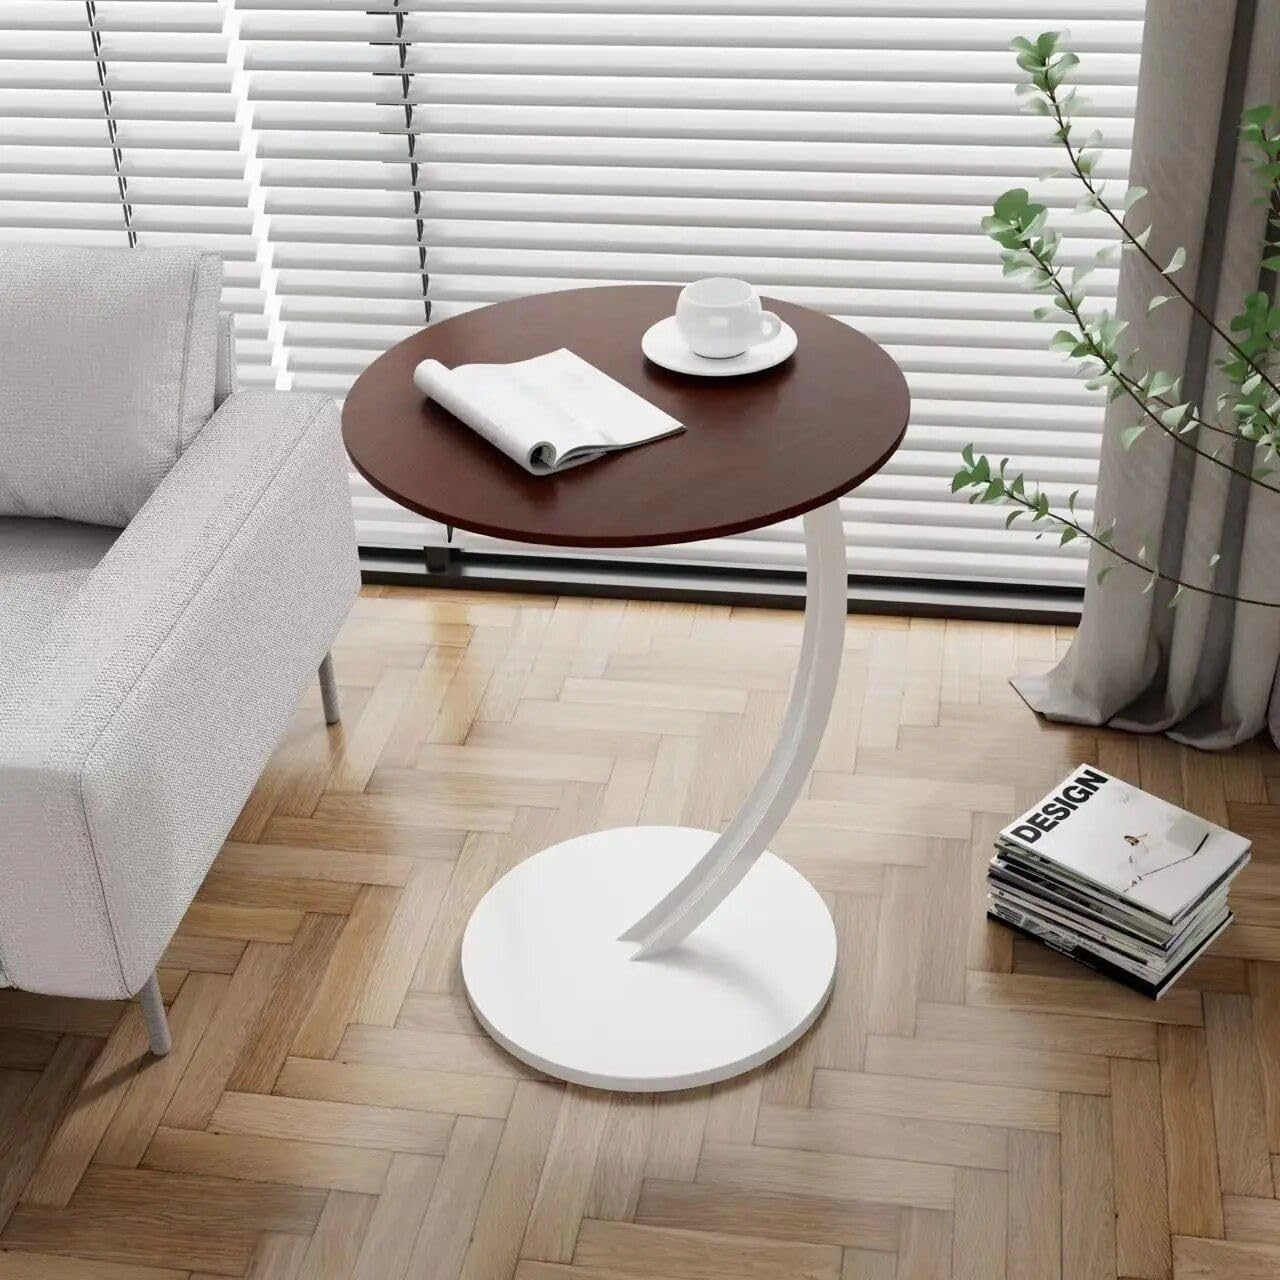 Sleek Nordic Metal Side Table – Modern Minimalist Coffee Table for Living Bedroom